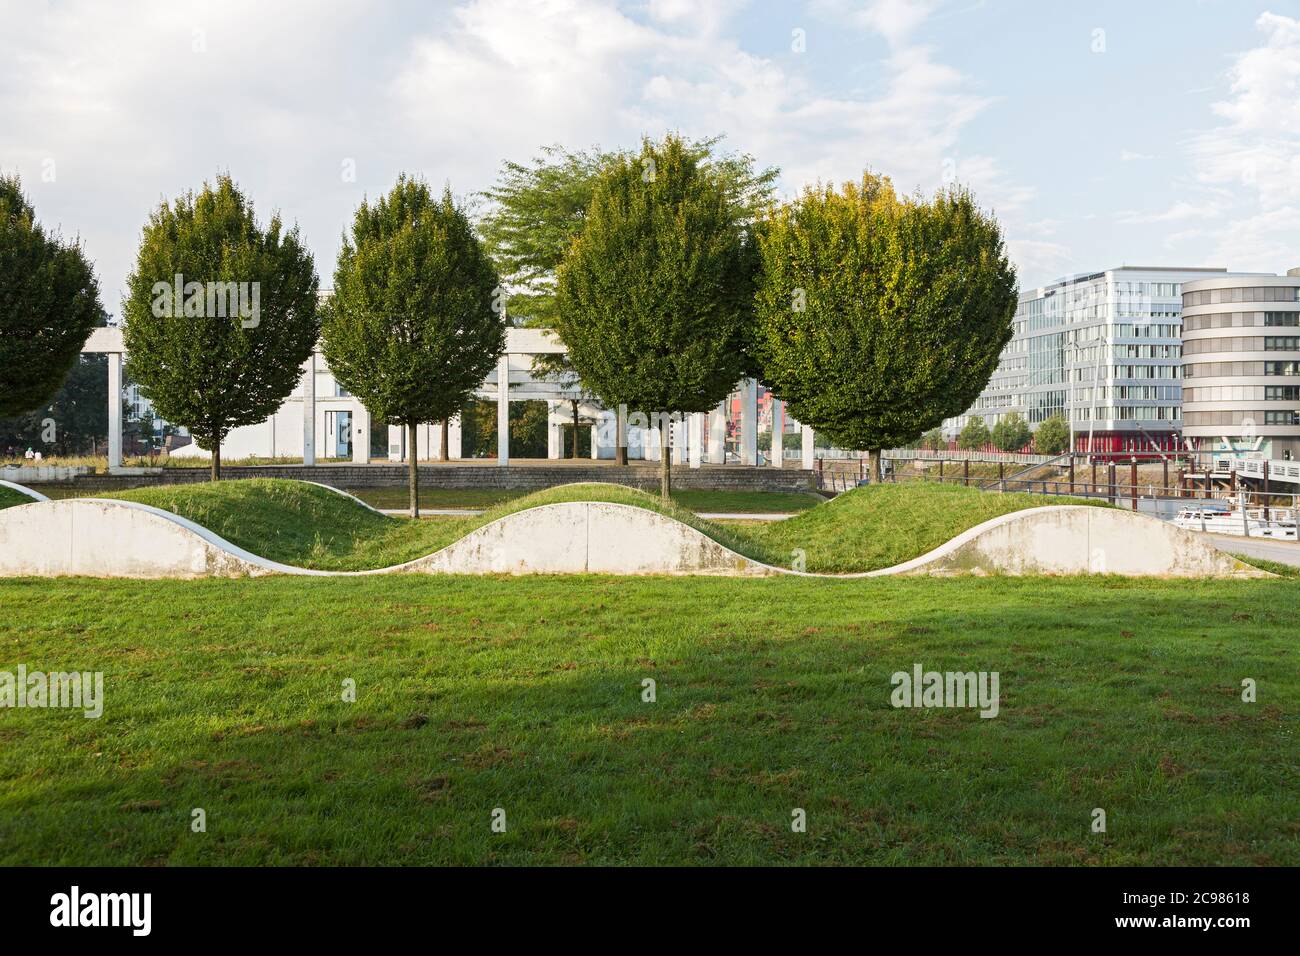 Garten der Erinnerung, Altstadtpark, Duisburg, Innenhafen Stock Photo